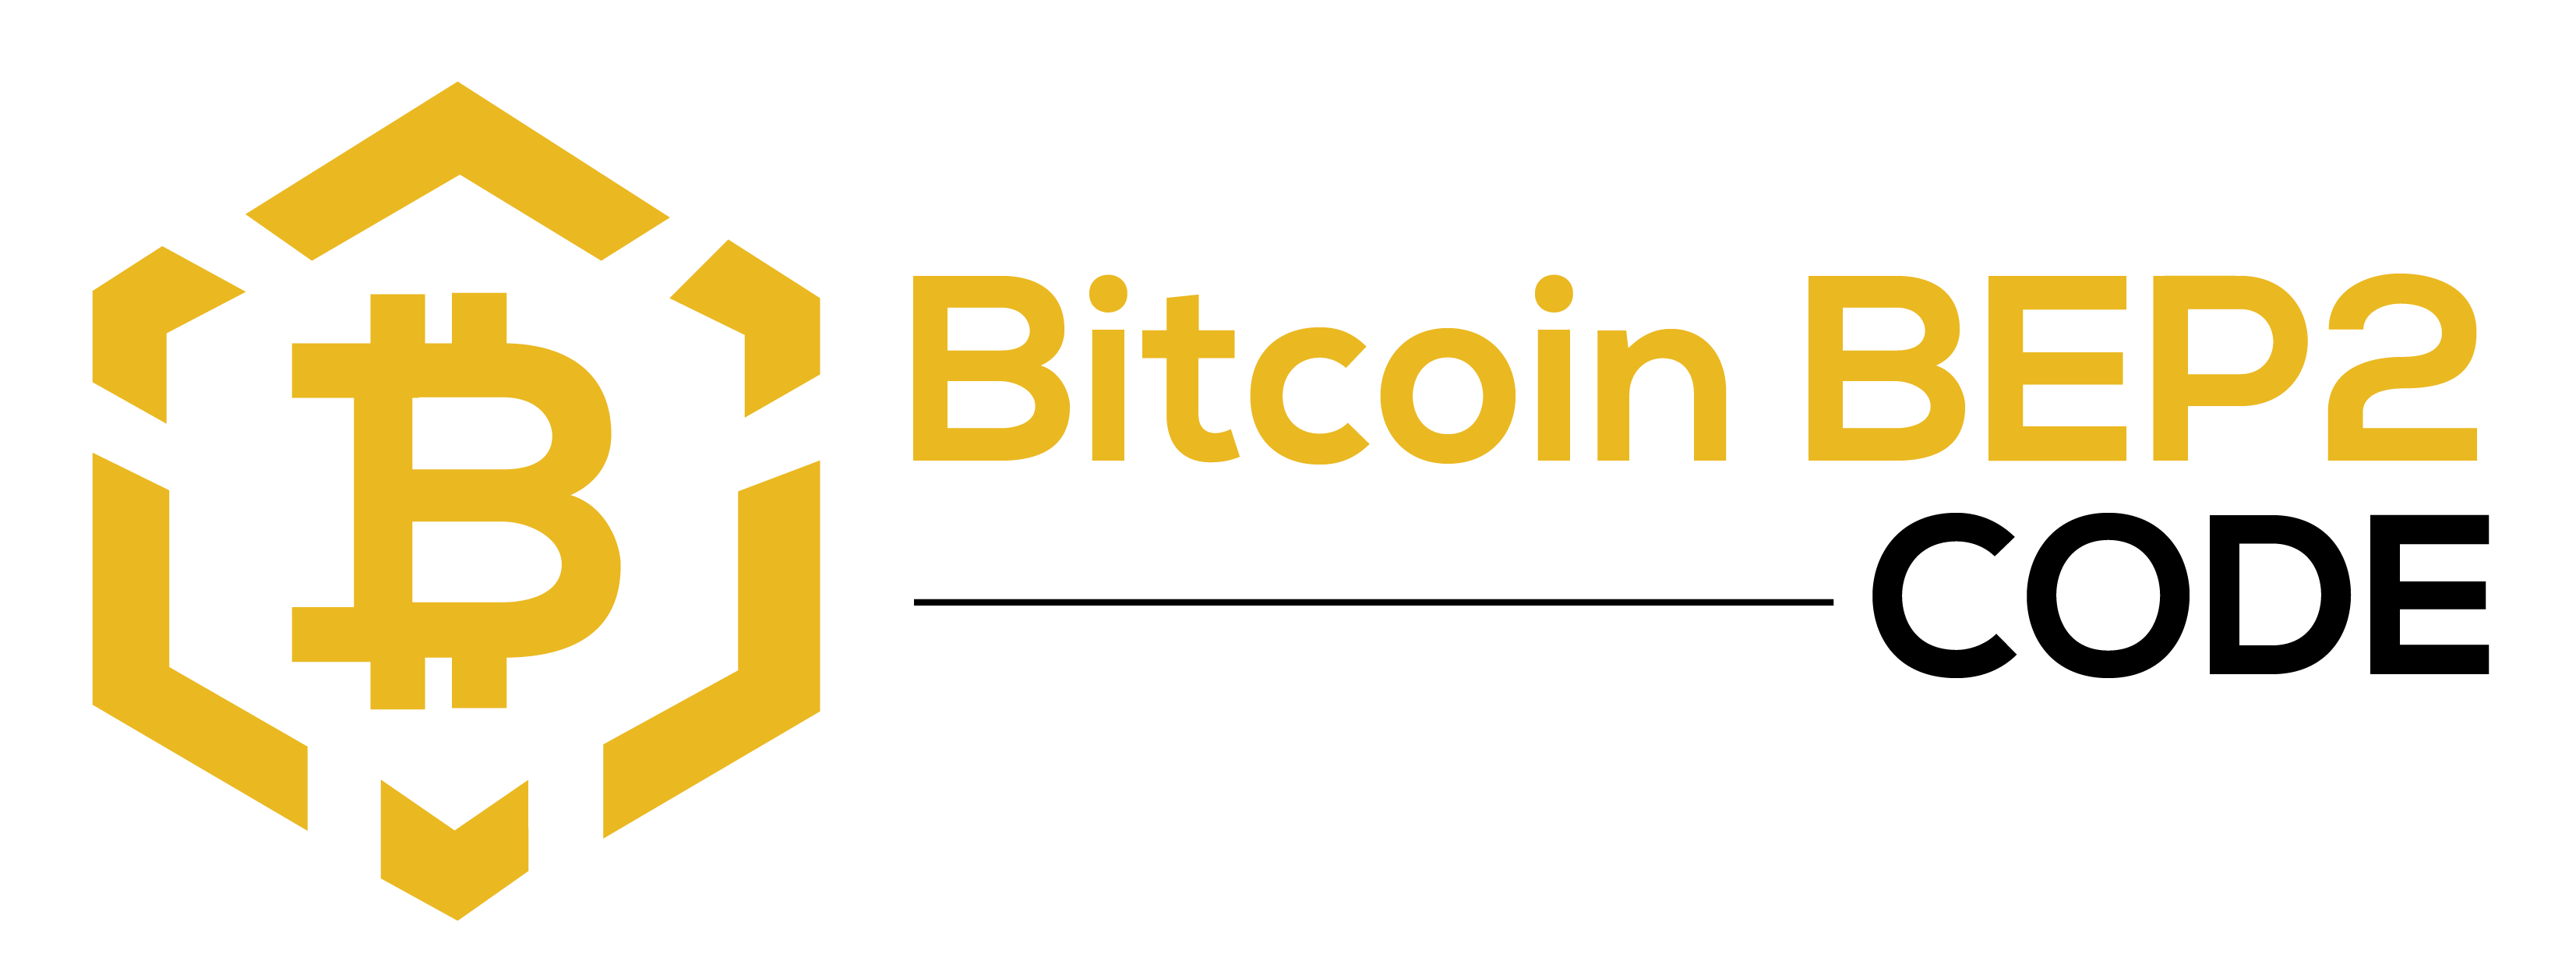 Bitcoin BEP2 Code - The Bitcoin BEP2 Code Team